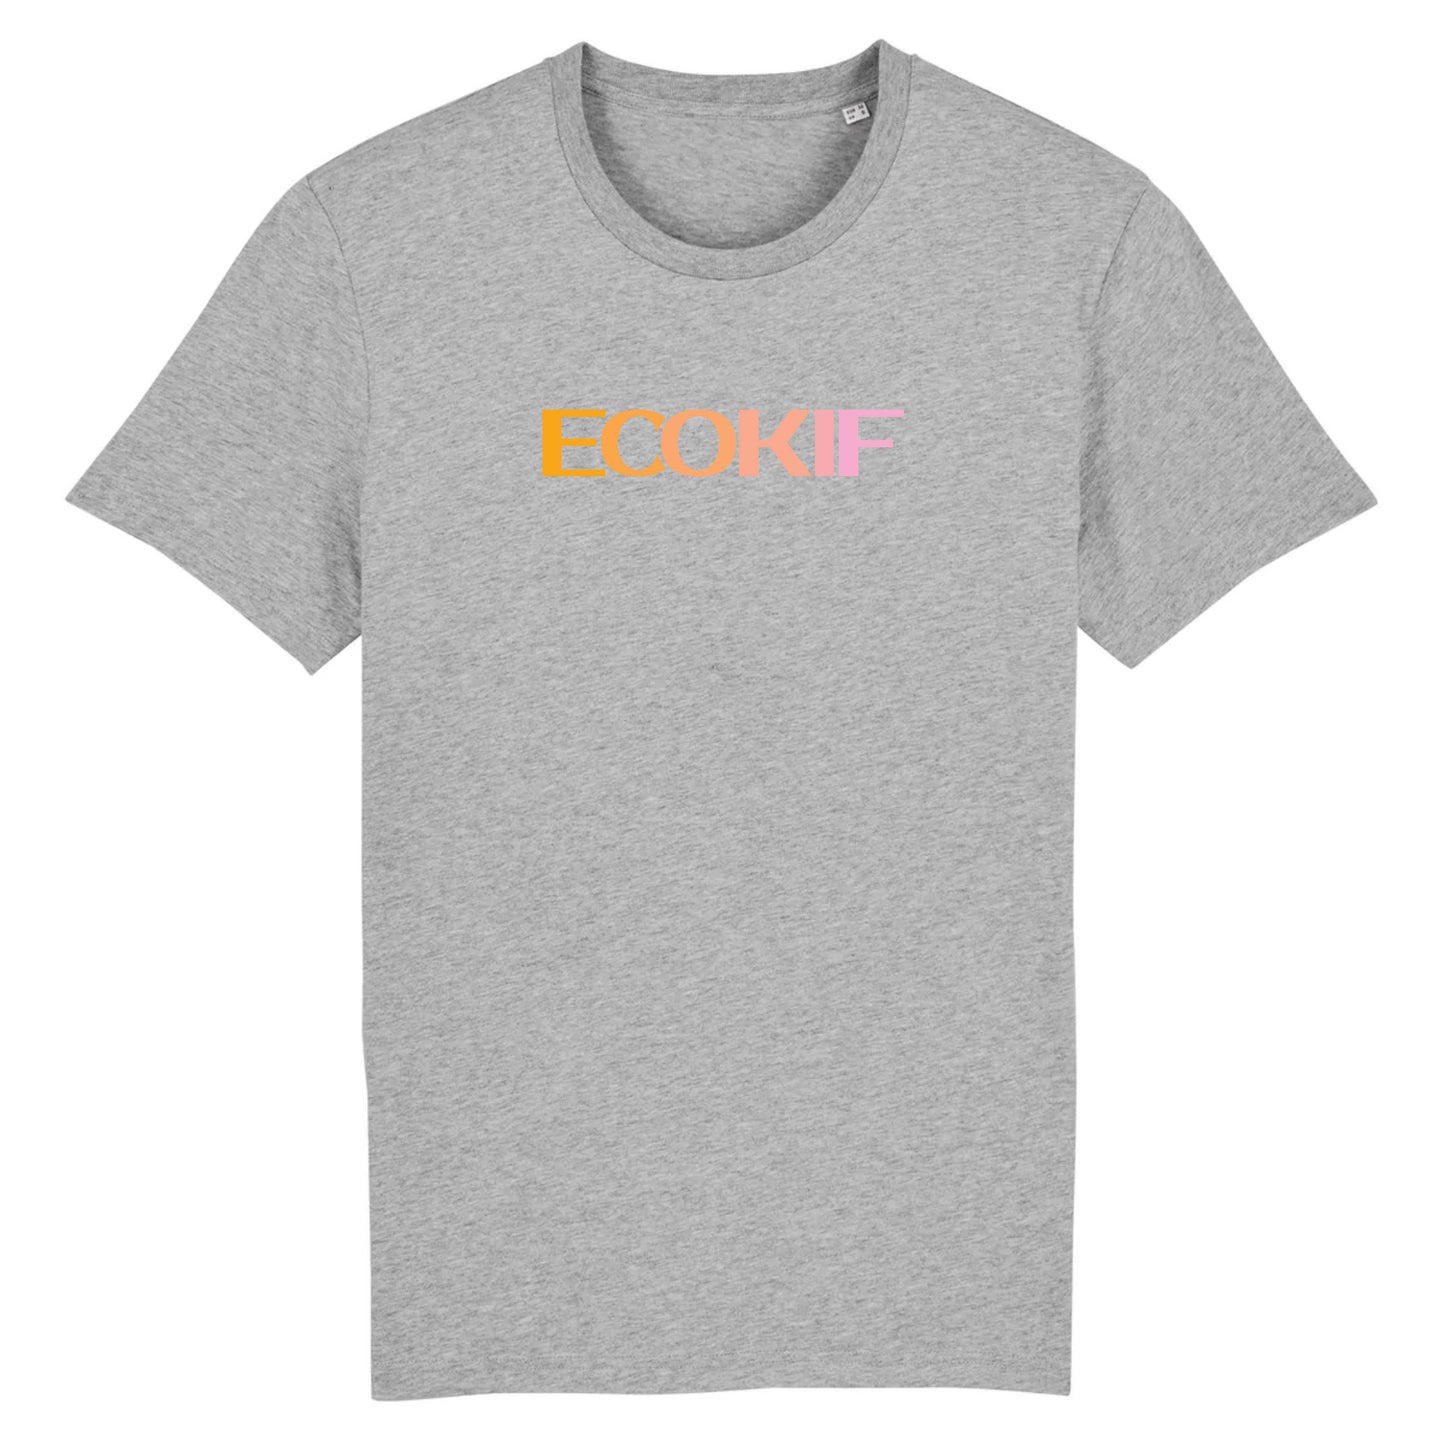 T-Shirt Unisexe U56 - Ecokif Unique